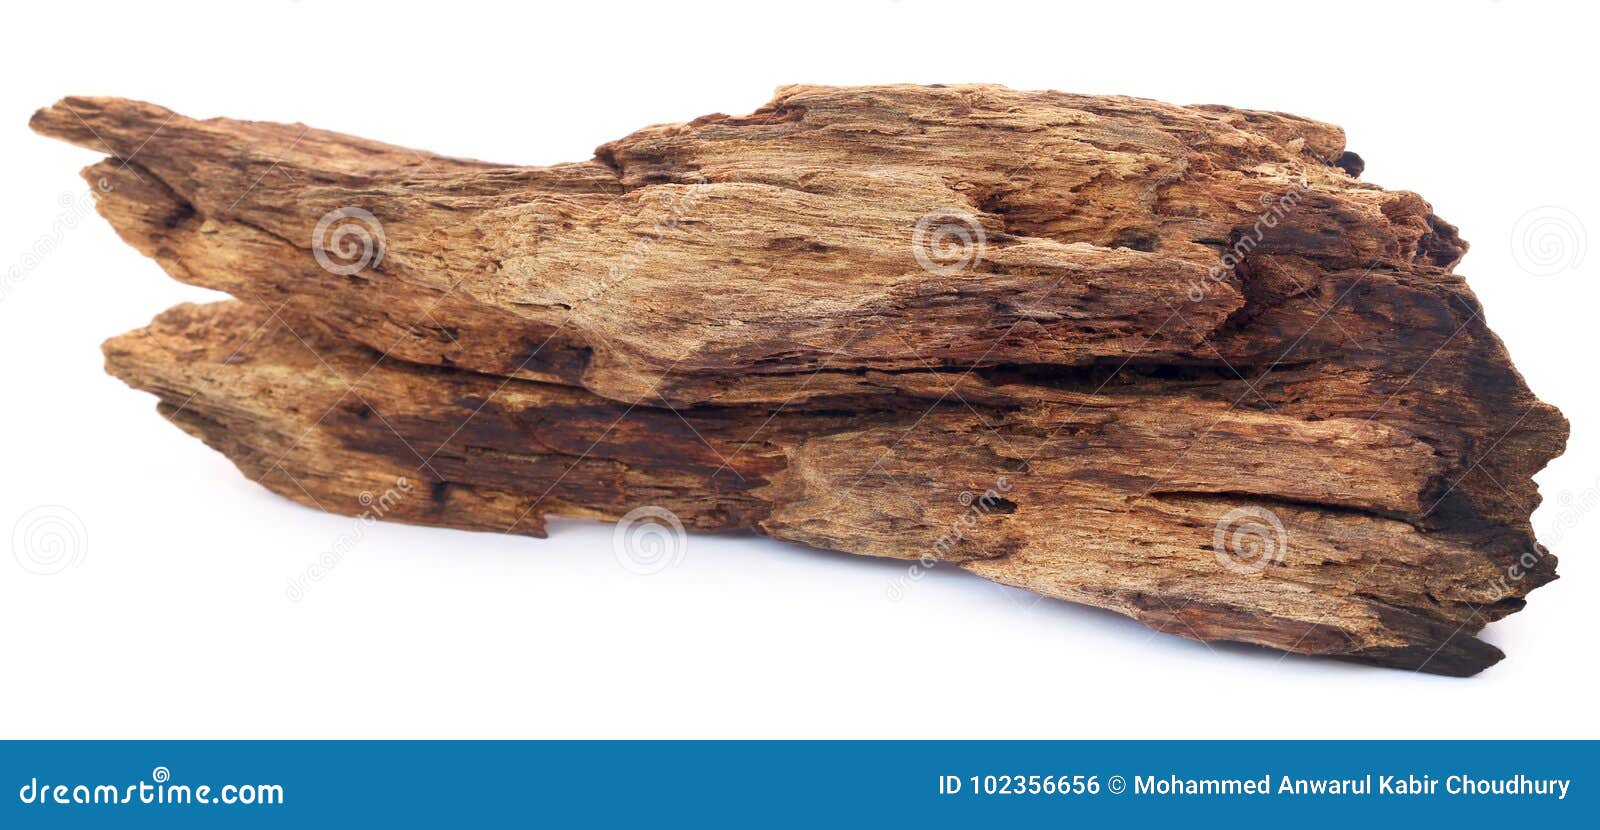 natual driftwood